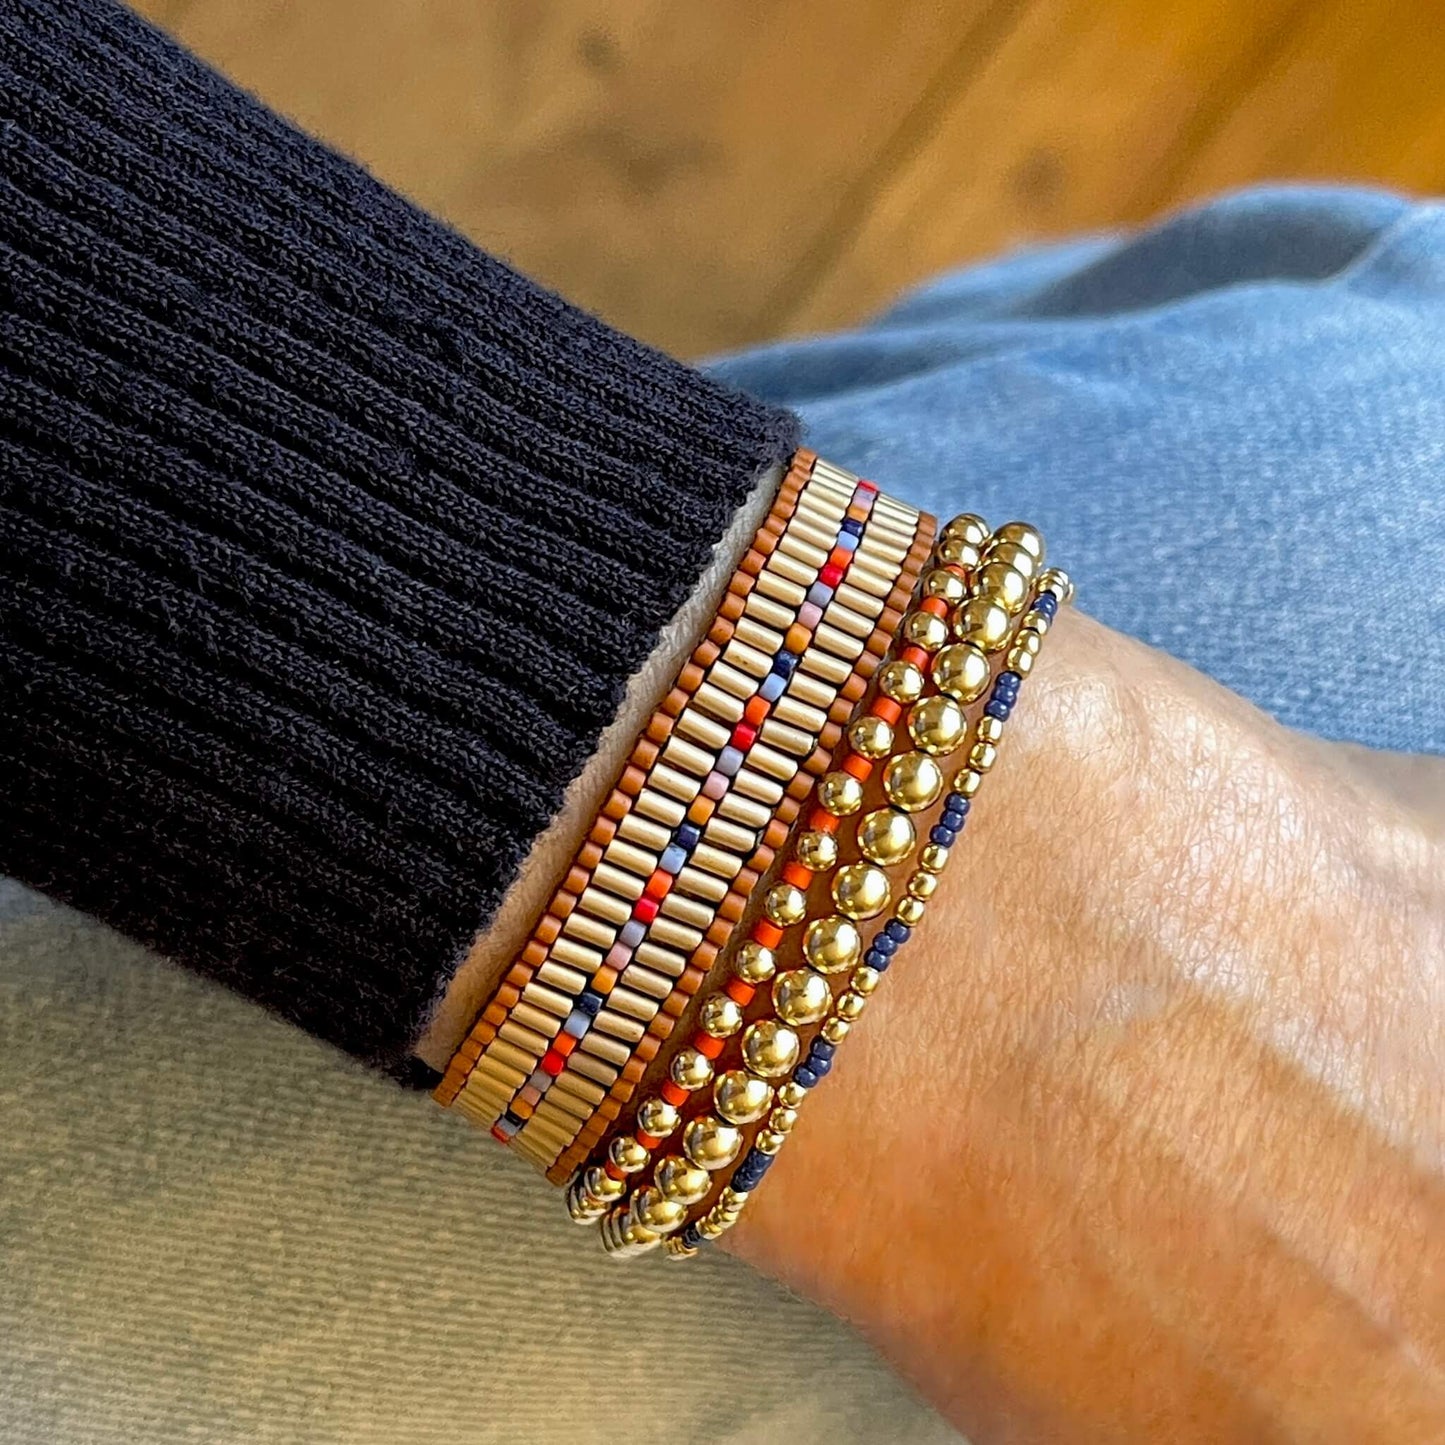 Stix Striped Bracelet in Brown/Gold/Multi-Color Beads | Southwest Hues